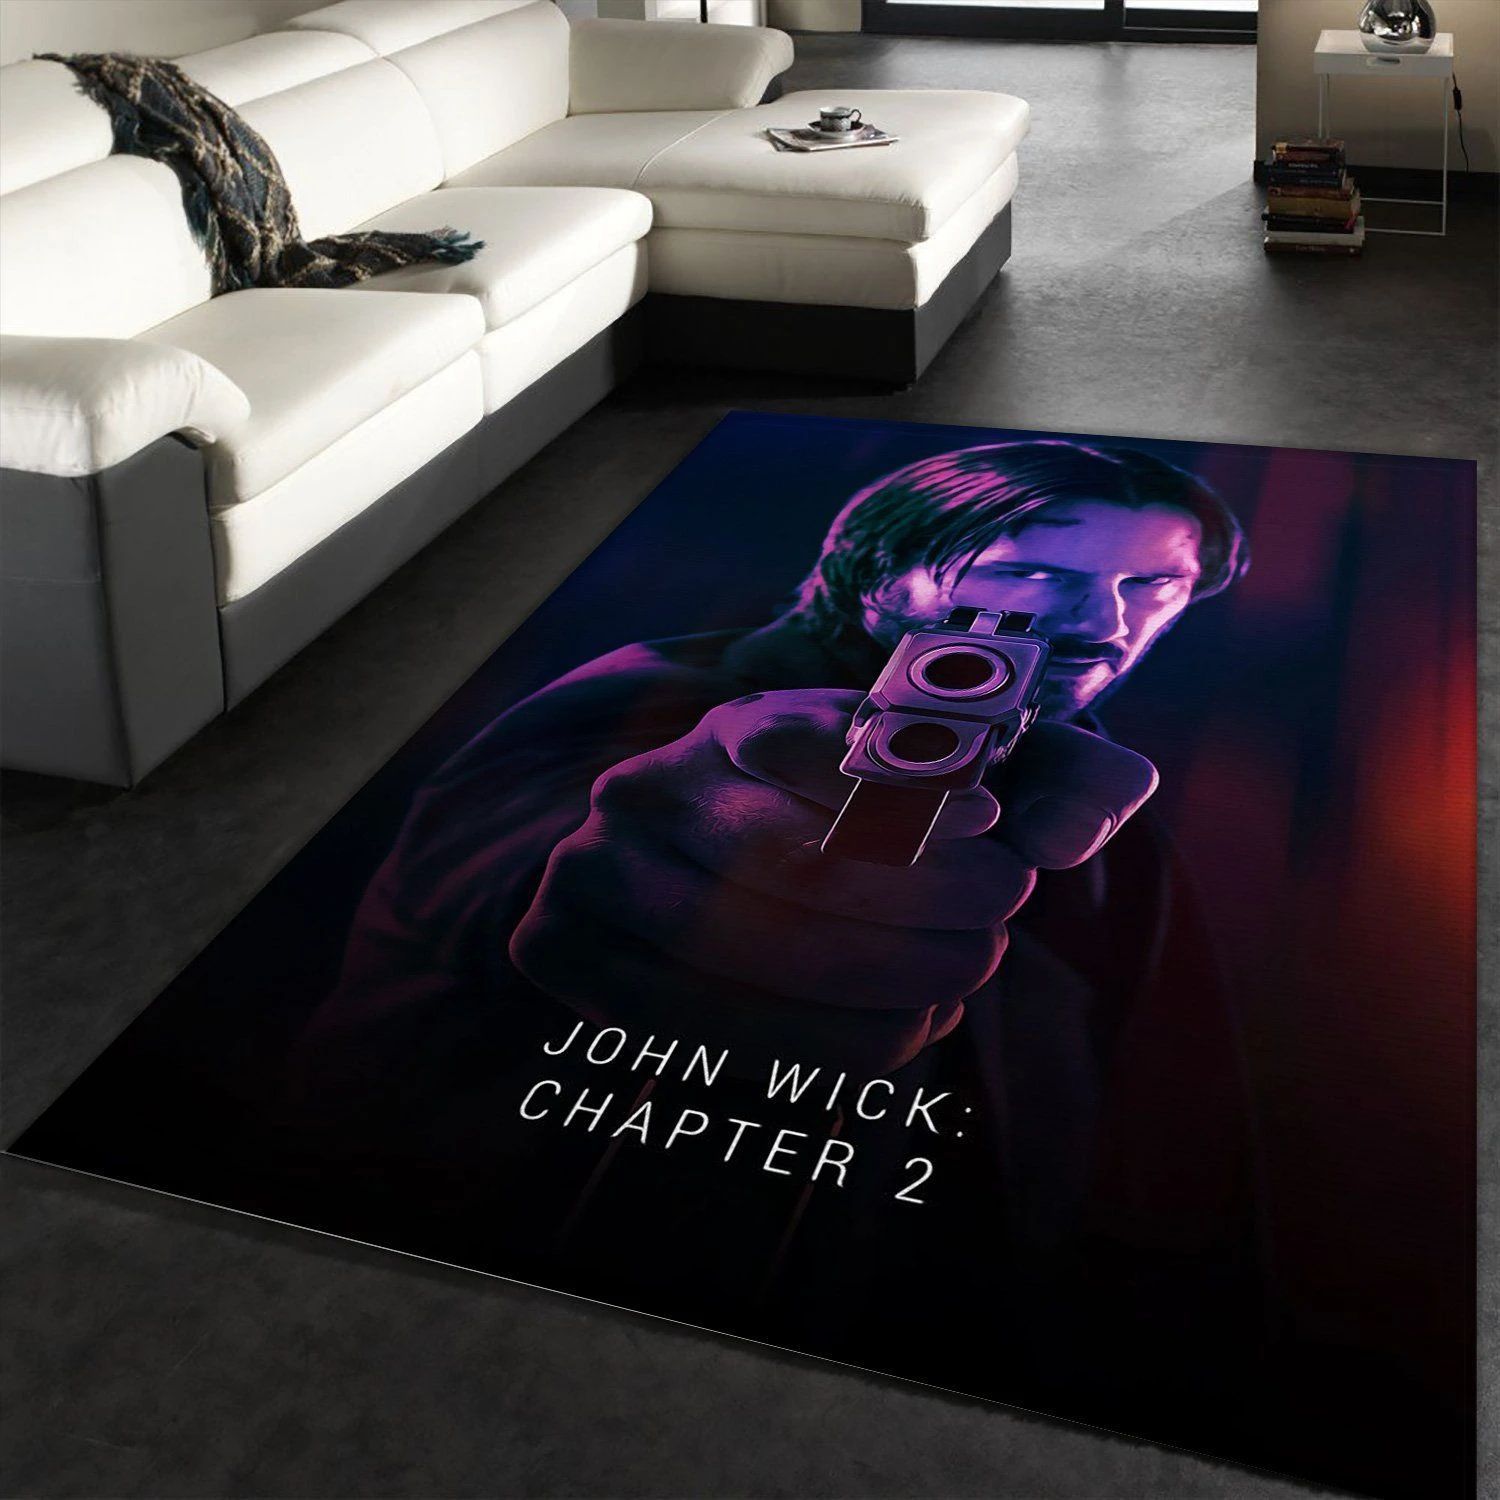 John Wick Chapter 2 Rug Art Painting Movie Rugs Home Decor Floor Decor - Indoor Outdoor Rugs 1